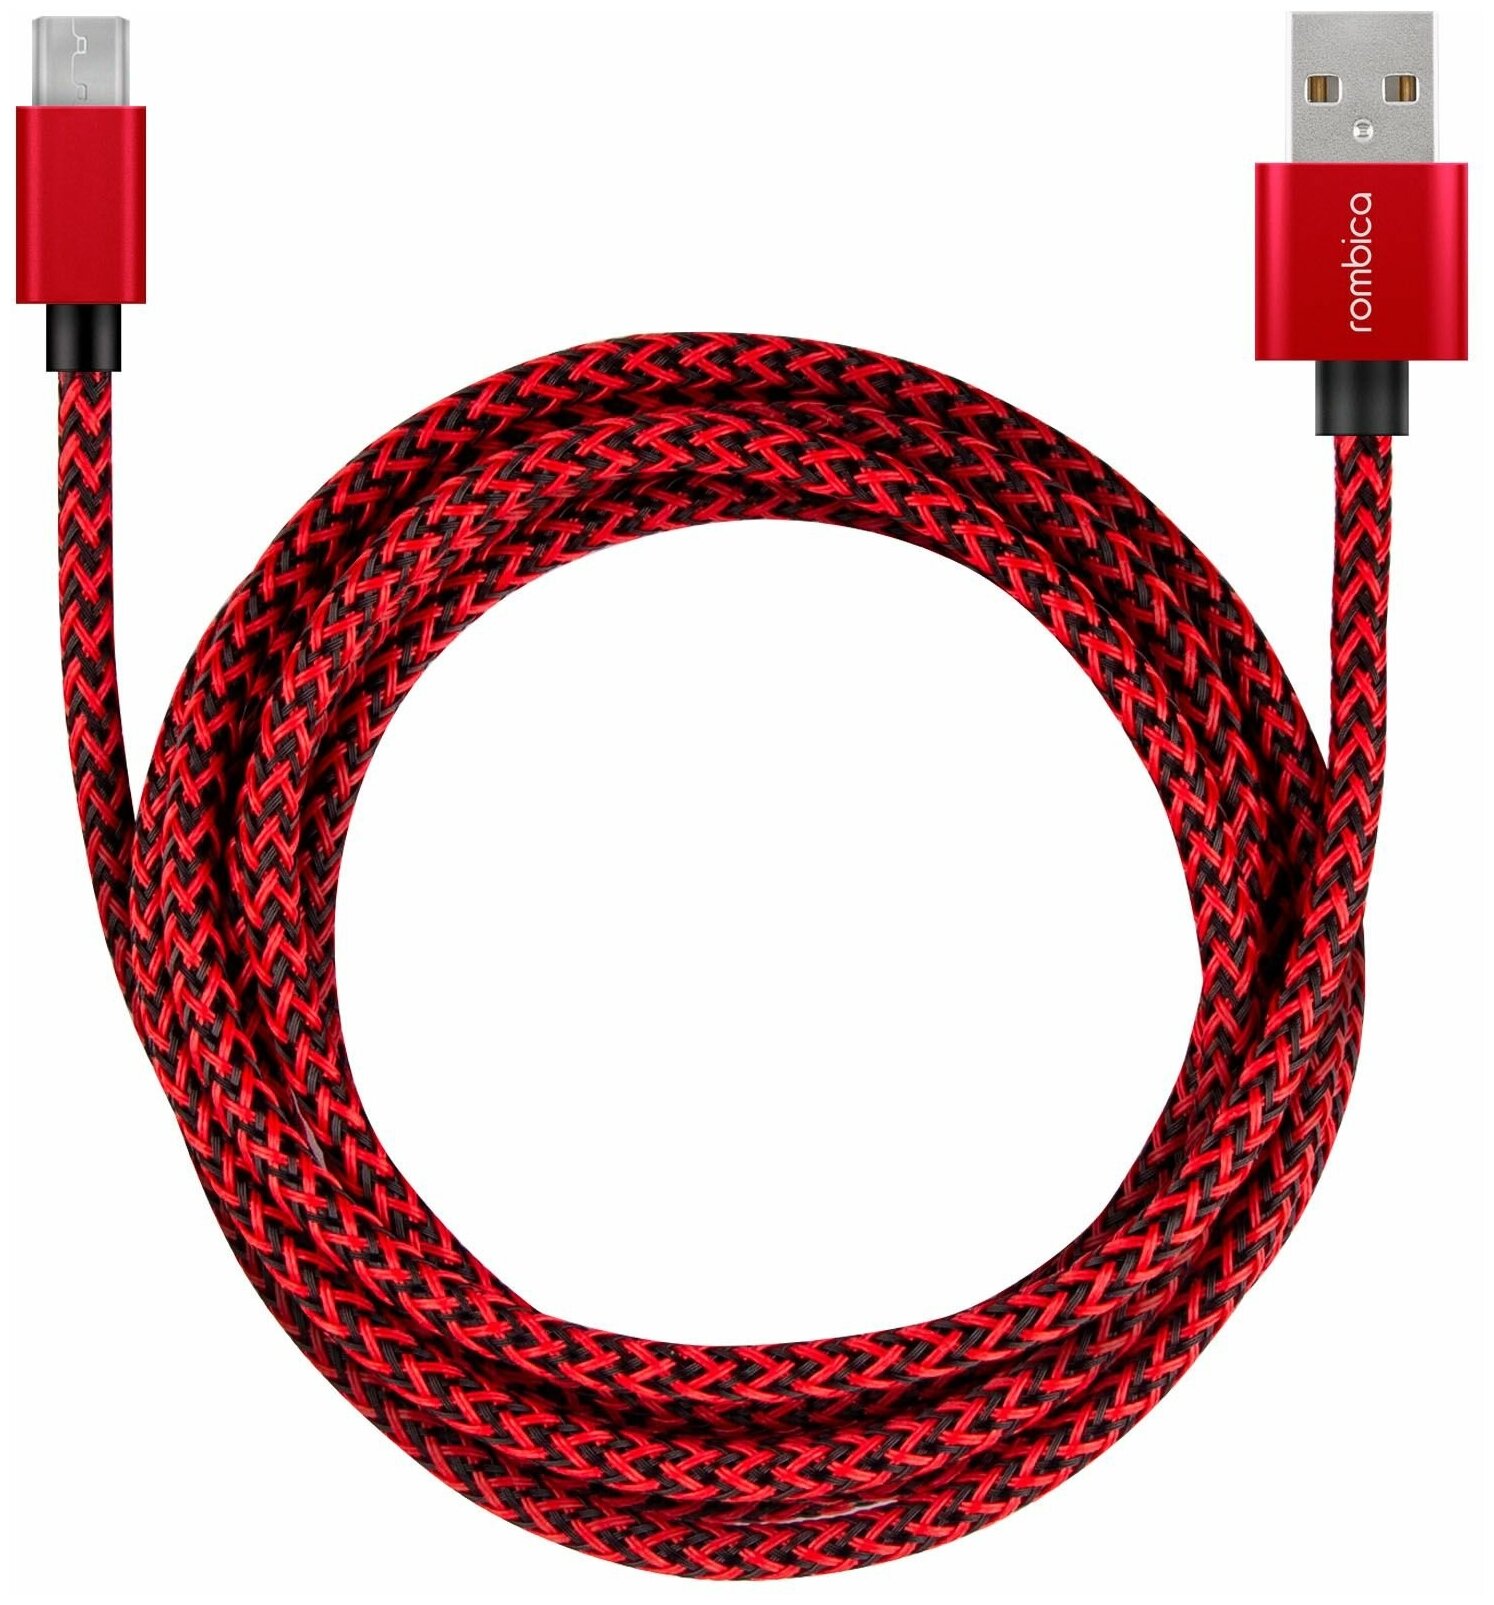 Кабель Rombica Digital AB-04R Micro USB to USB cable, длина 2 м. Цвет красный.